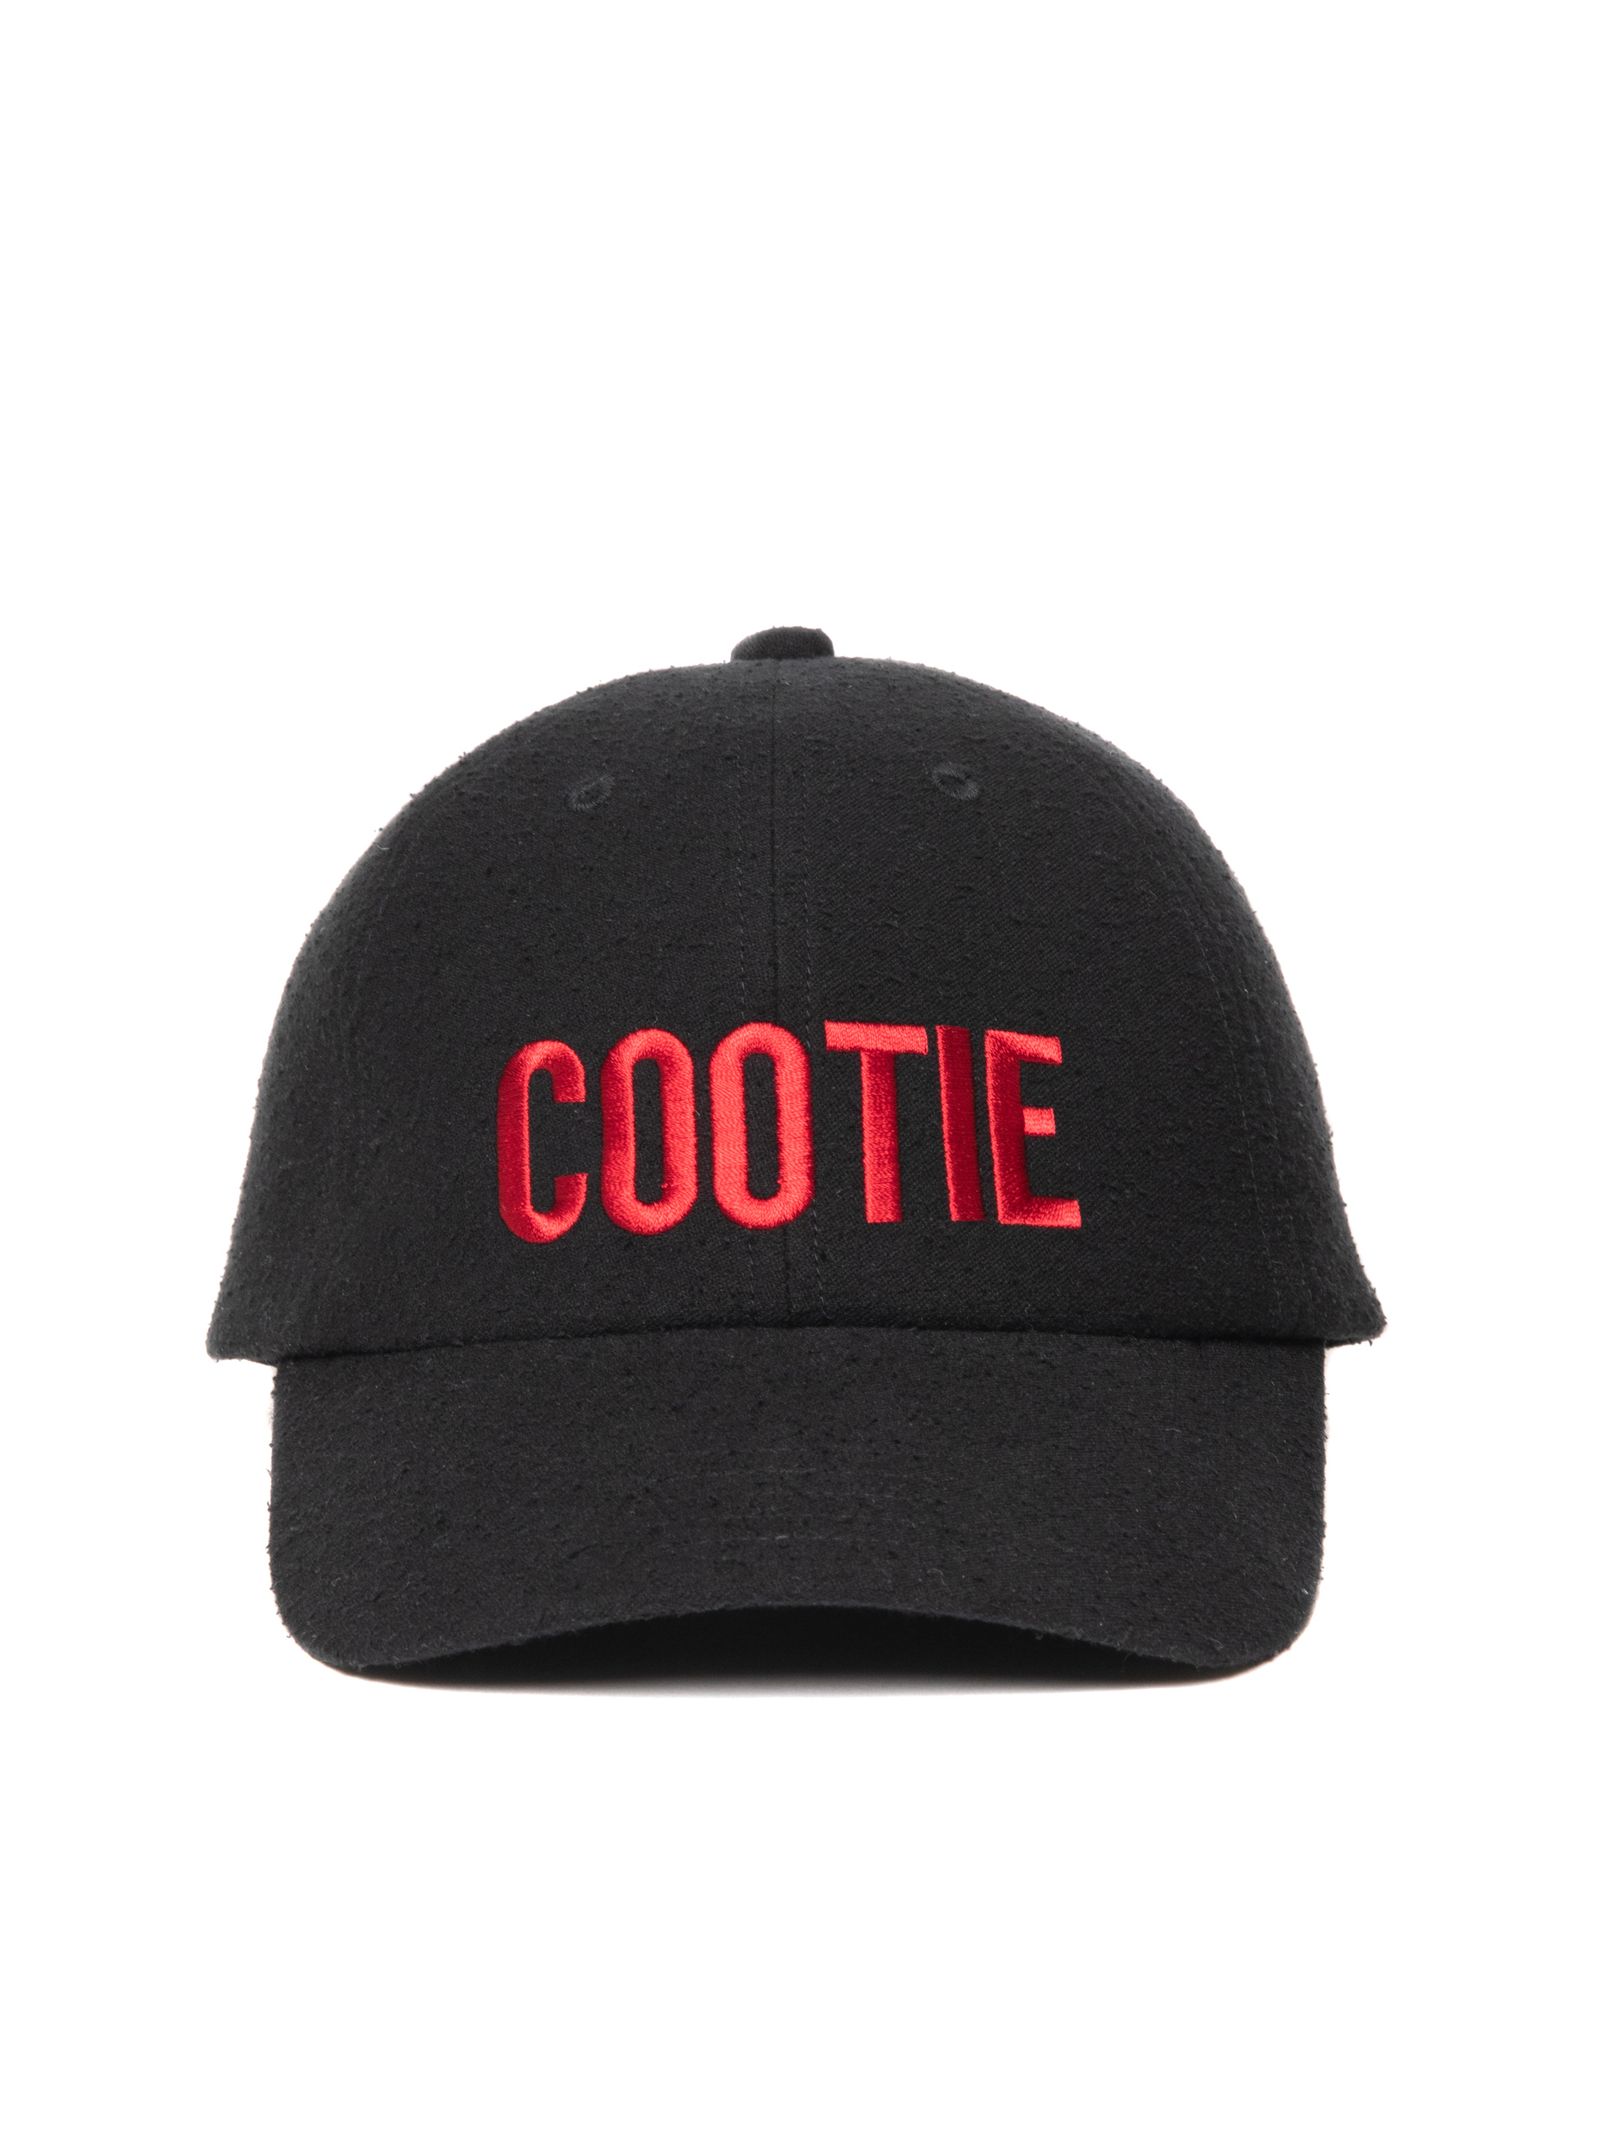 COOTIE LIMITED 506 BLACK WHITE Mサイズ - 帽子